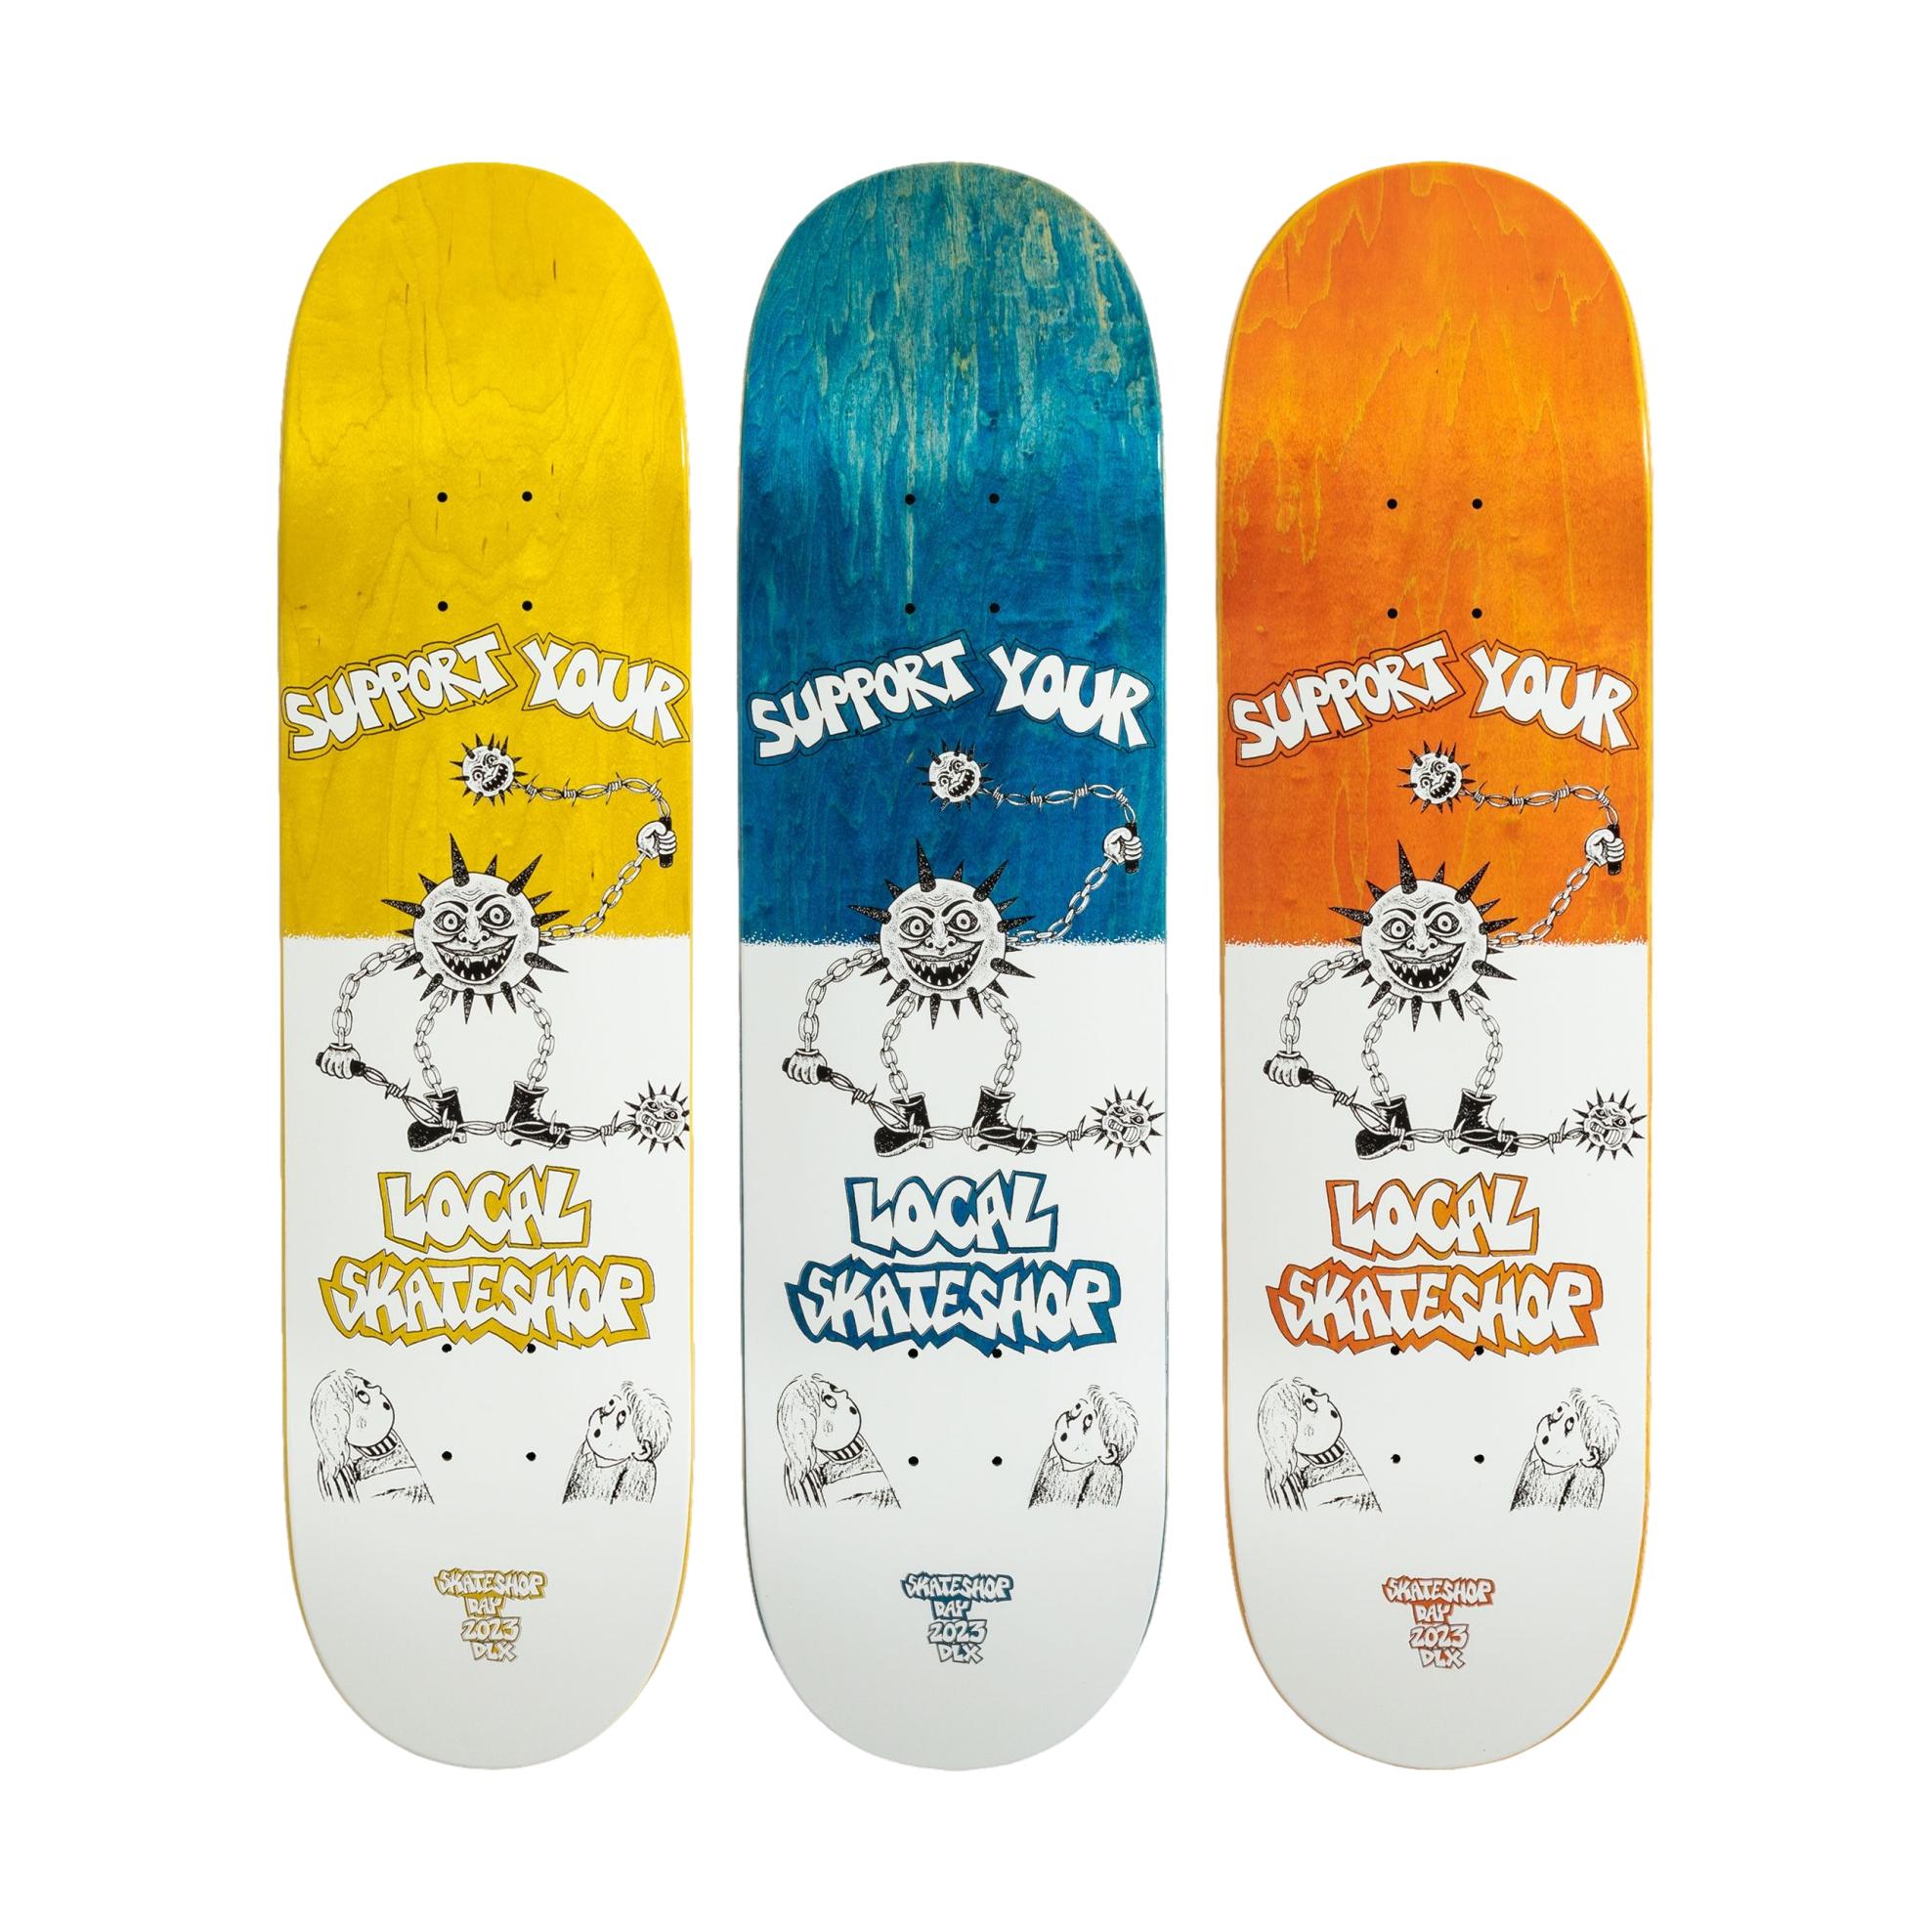 Deluxe Support Your Skate Shop Deck - Venue Skateboards